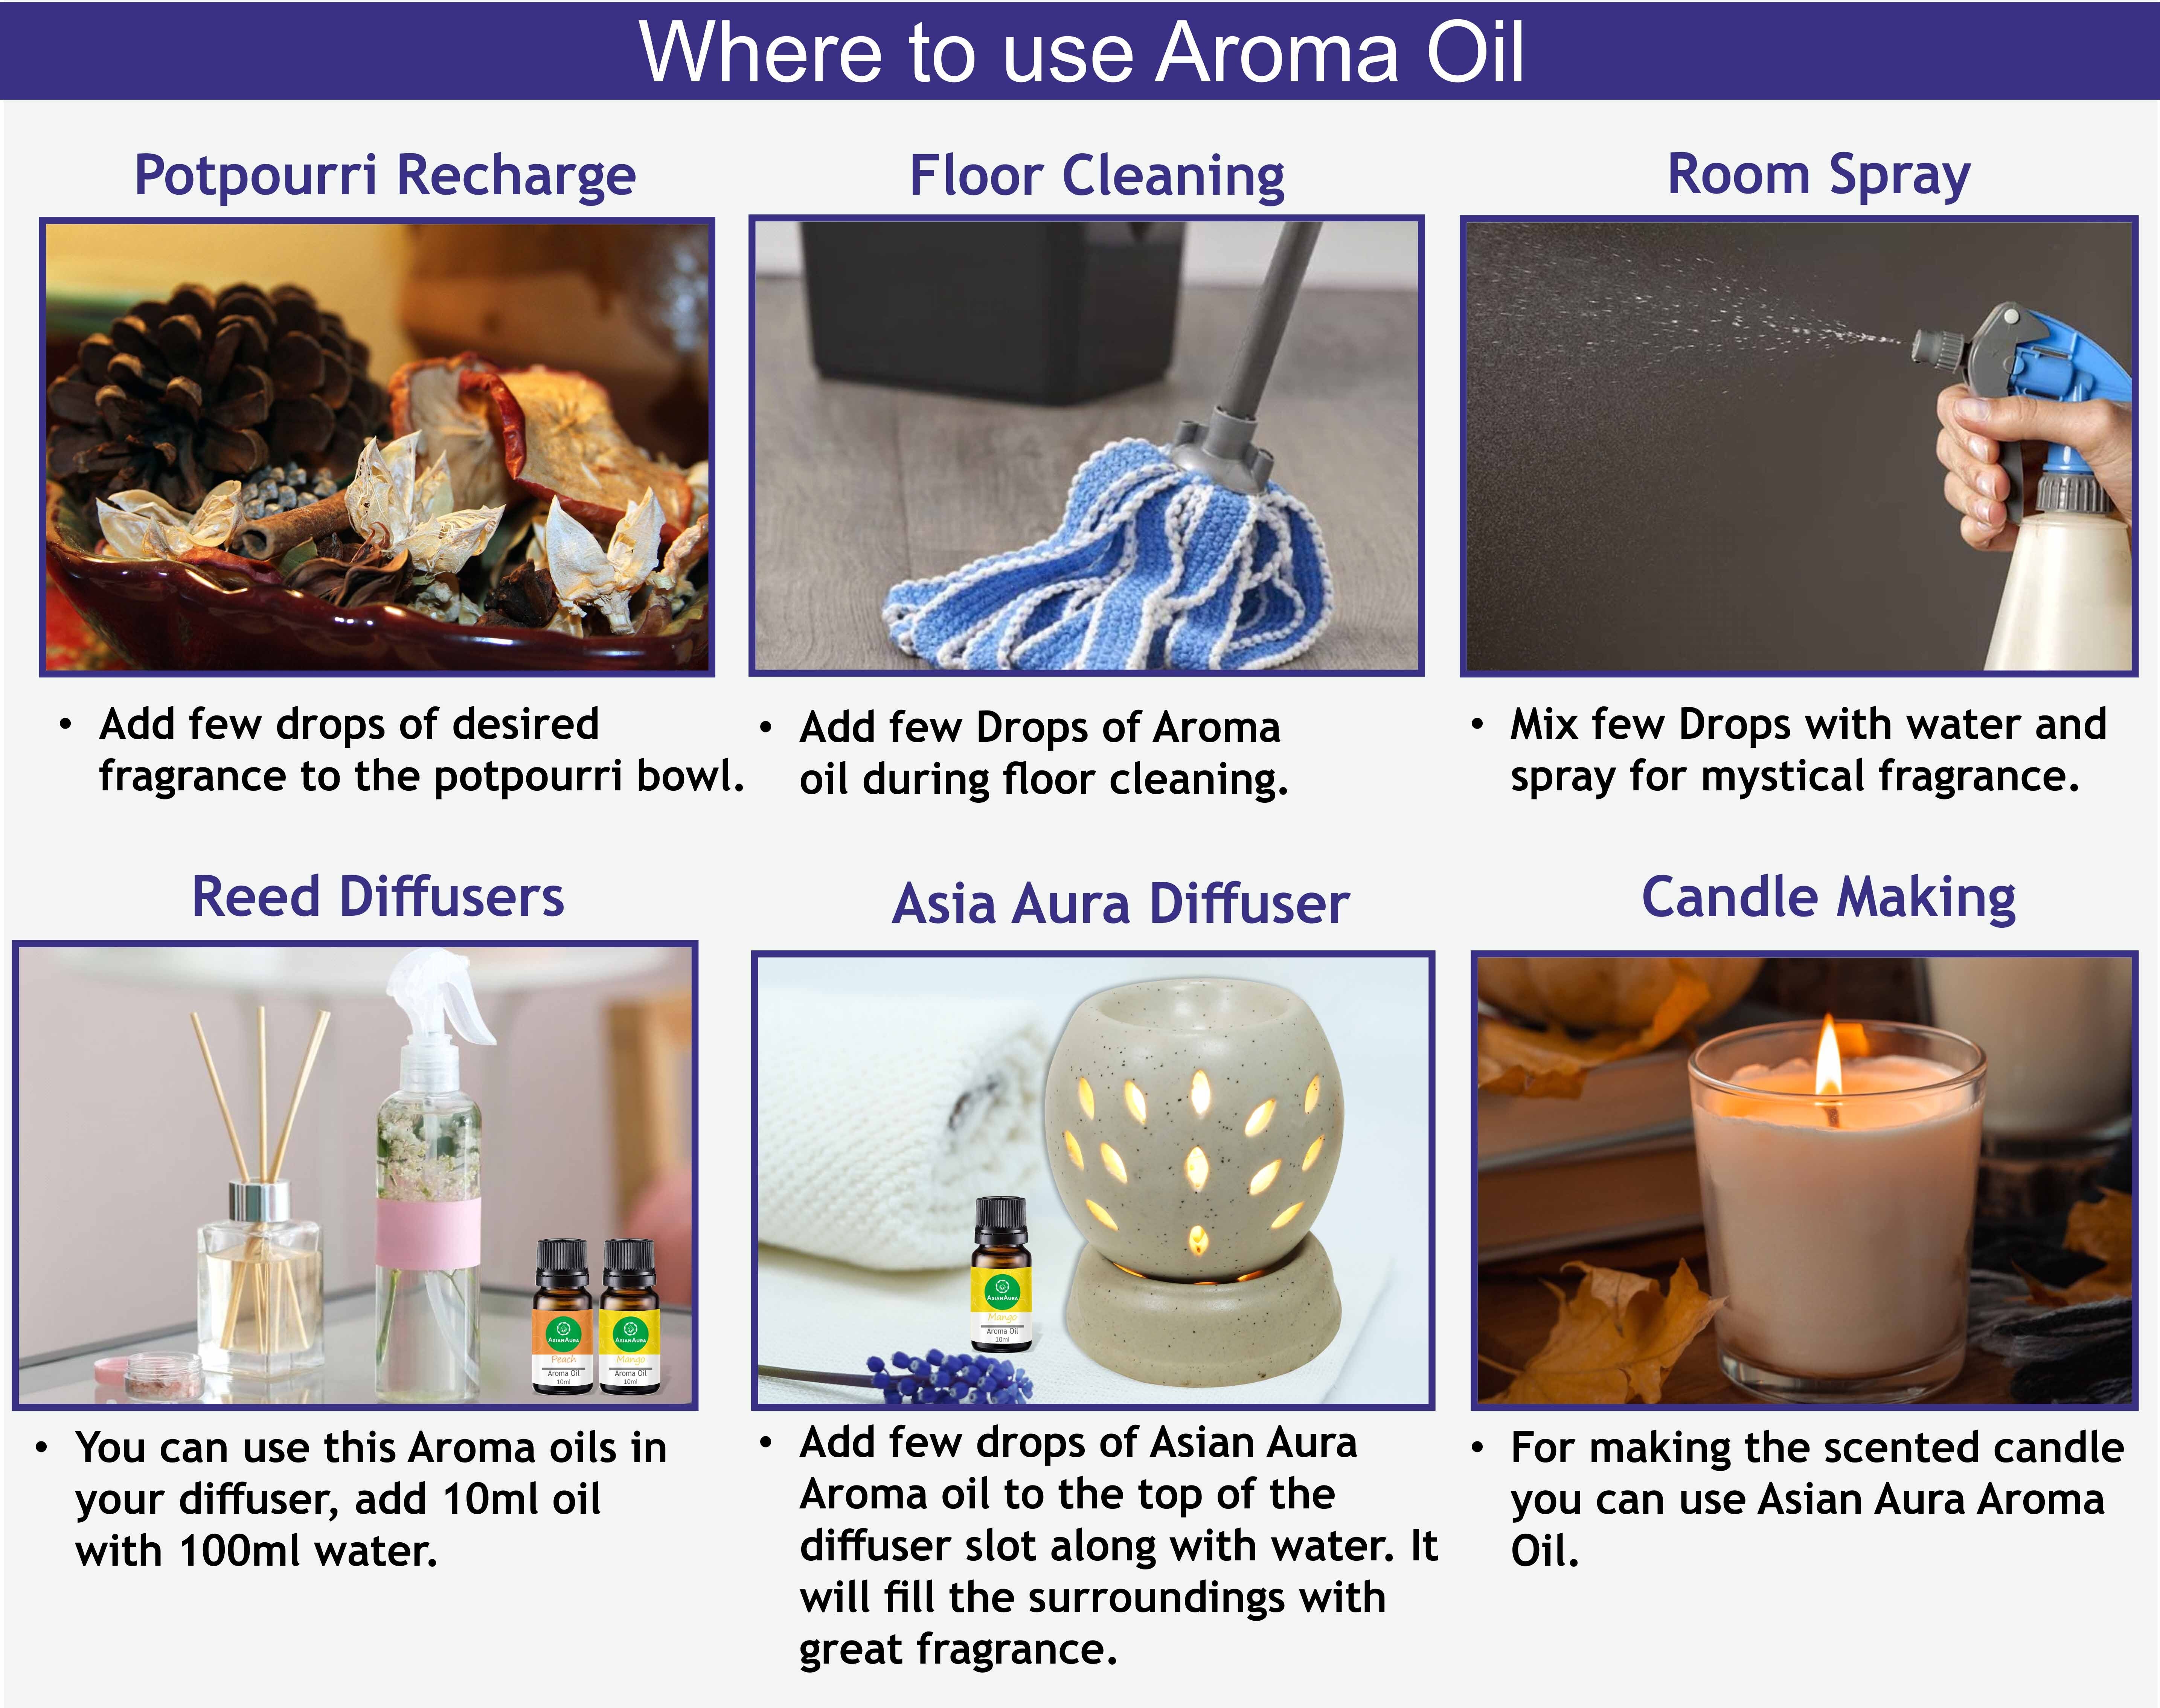 Asian Aura exotic fruit combo 10ml Aroma oil Set of 6